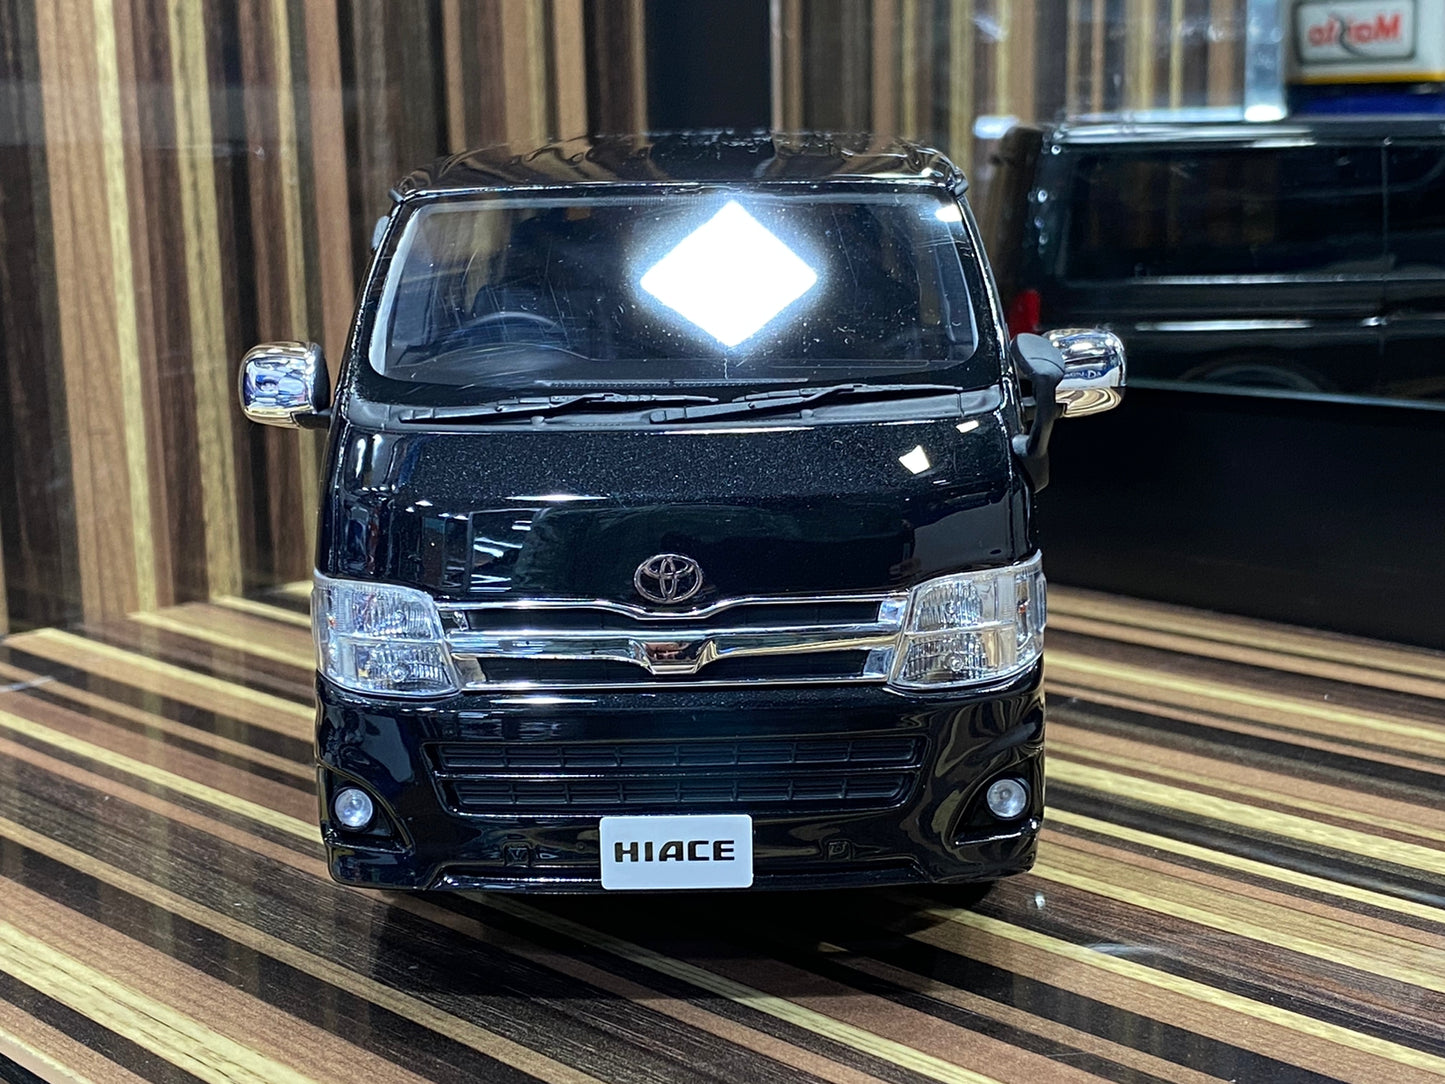 1/18 Diecast Toyota Hiace Black Kyosho samurai Scale Model Car